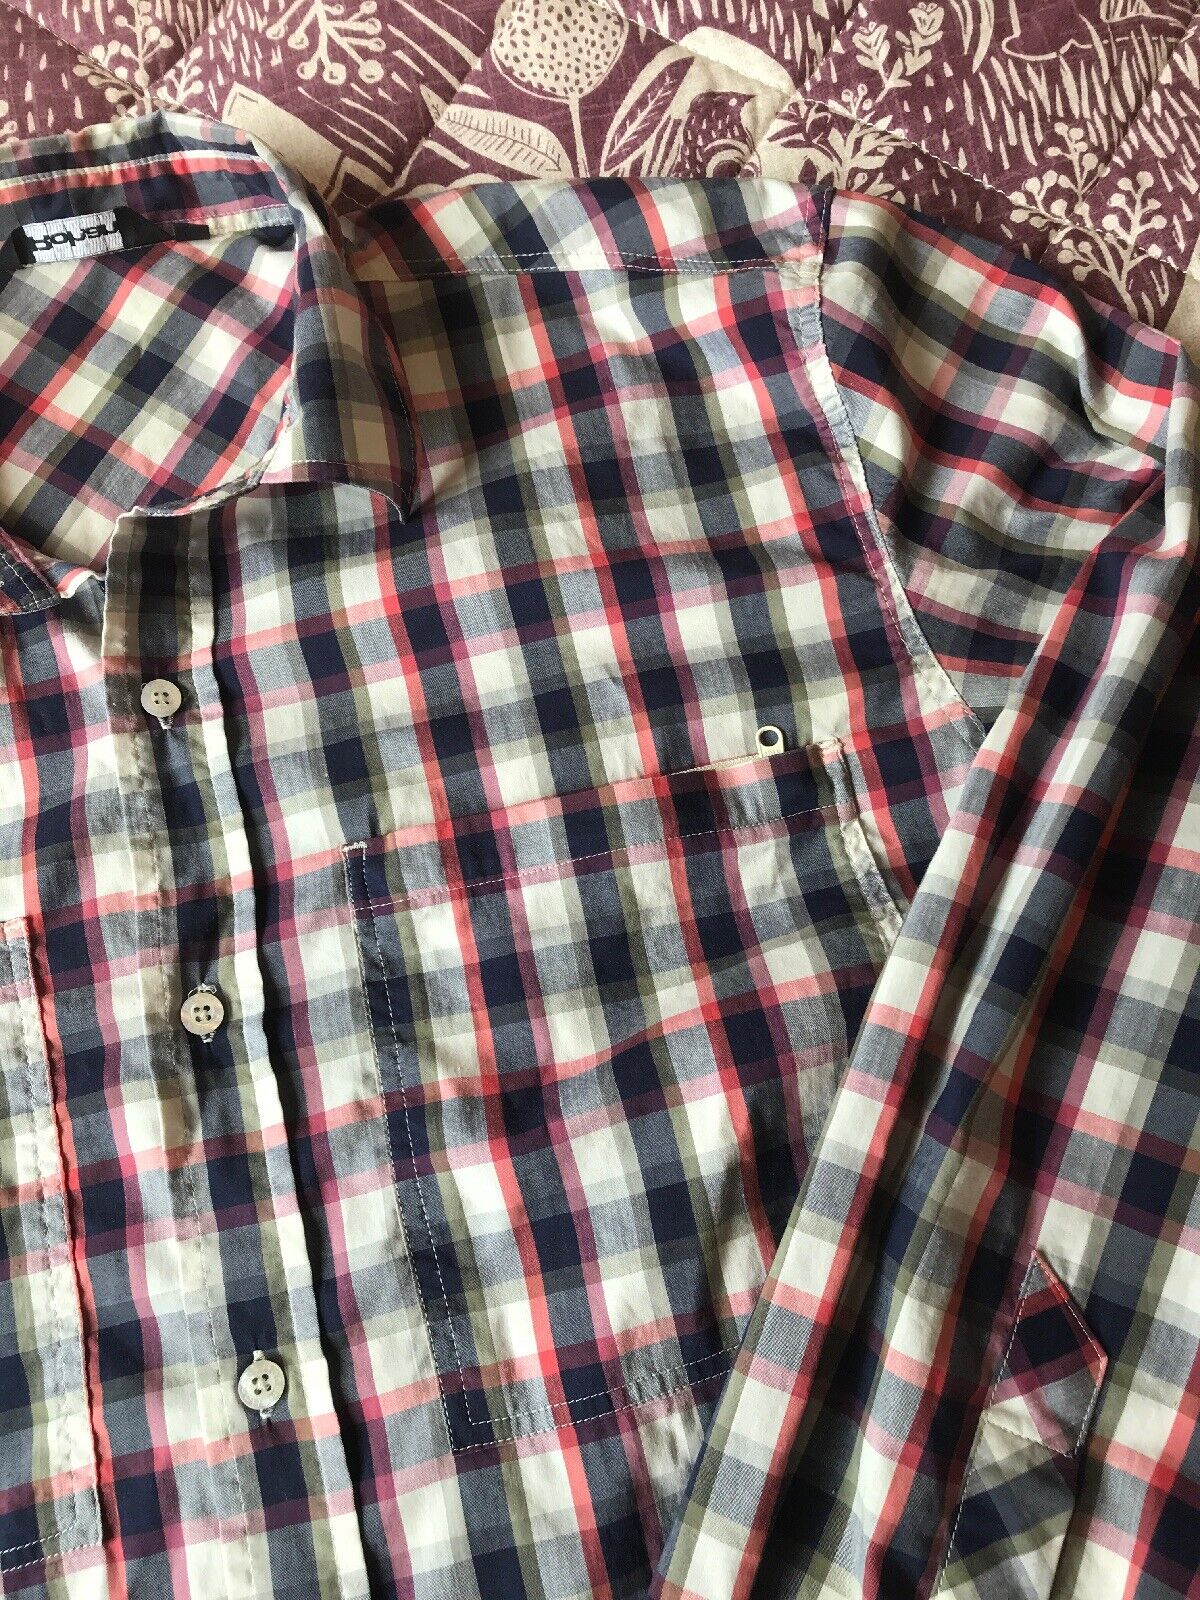 Rohan Fenland Shirt Size Large | eBay